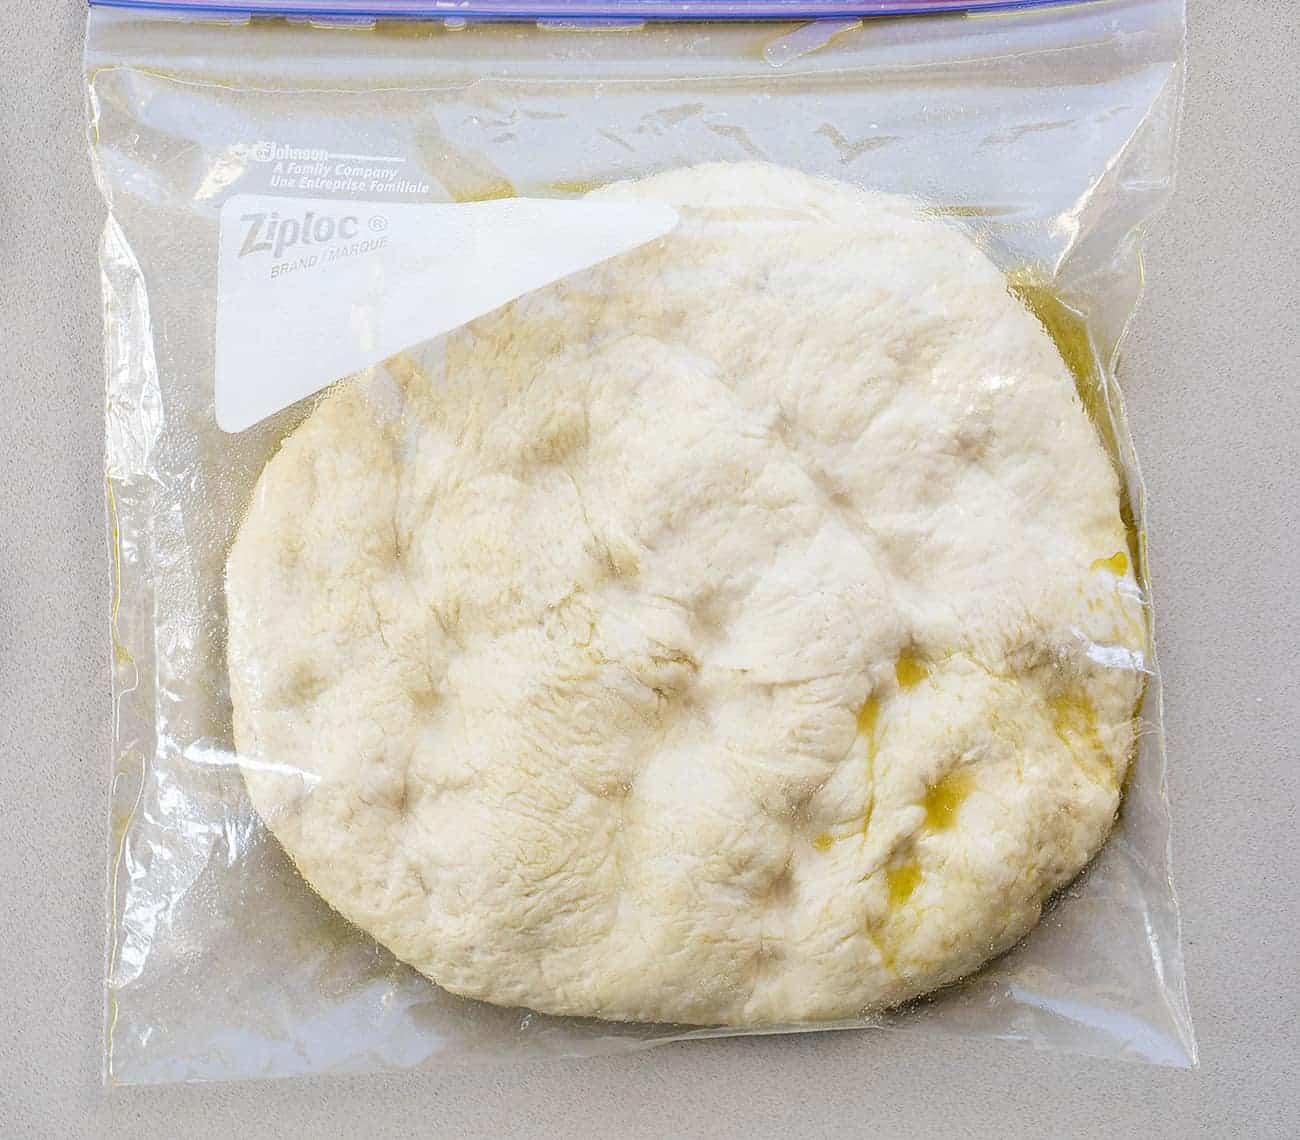 Raw Bread Dough in a Bag